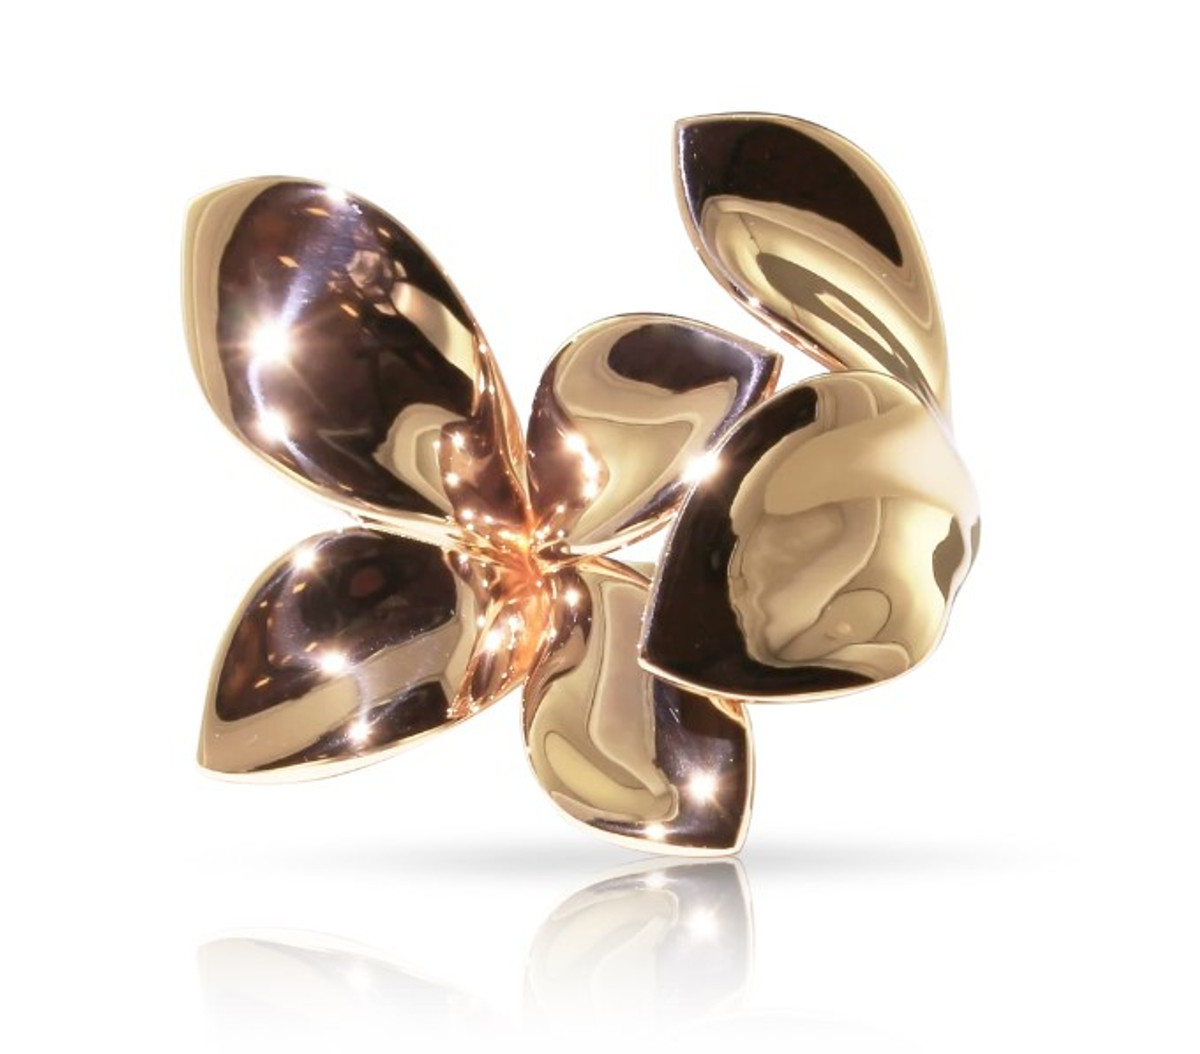 Pasquale Bruni 18K Rose Gold Giardini Segreti Ring, Size 7-59544 Product Image